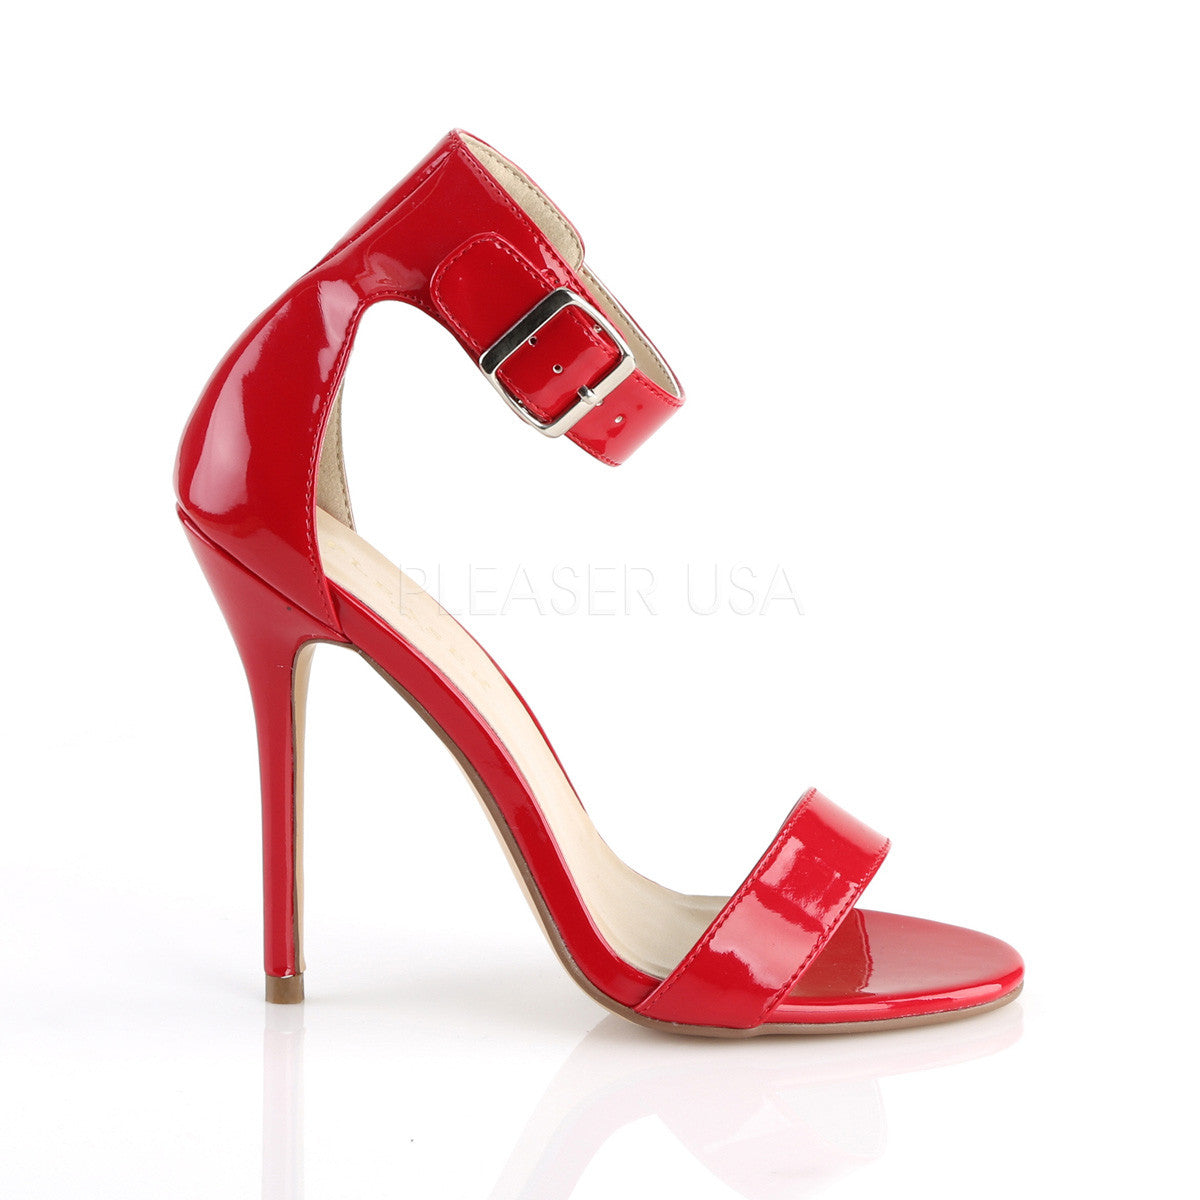 Ellie Shoes 5 Inch Heel Slip On Sandal Women'S Size Shoe With Skinny Straps  | eBay